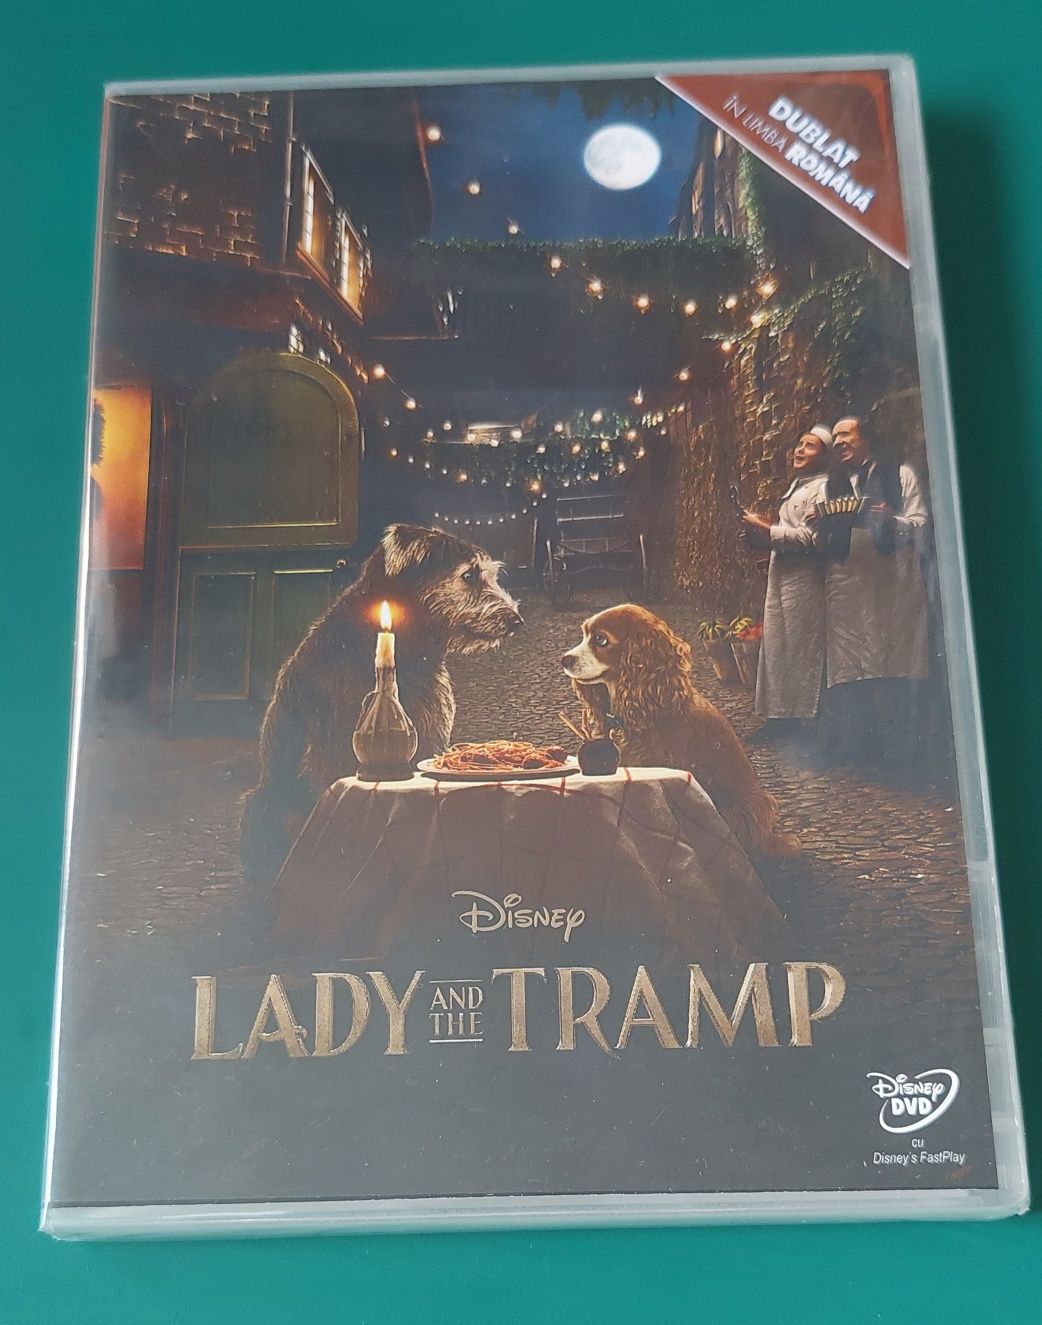 Doamna si vagabondul (Lady and the Tramp) (2019)